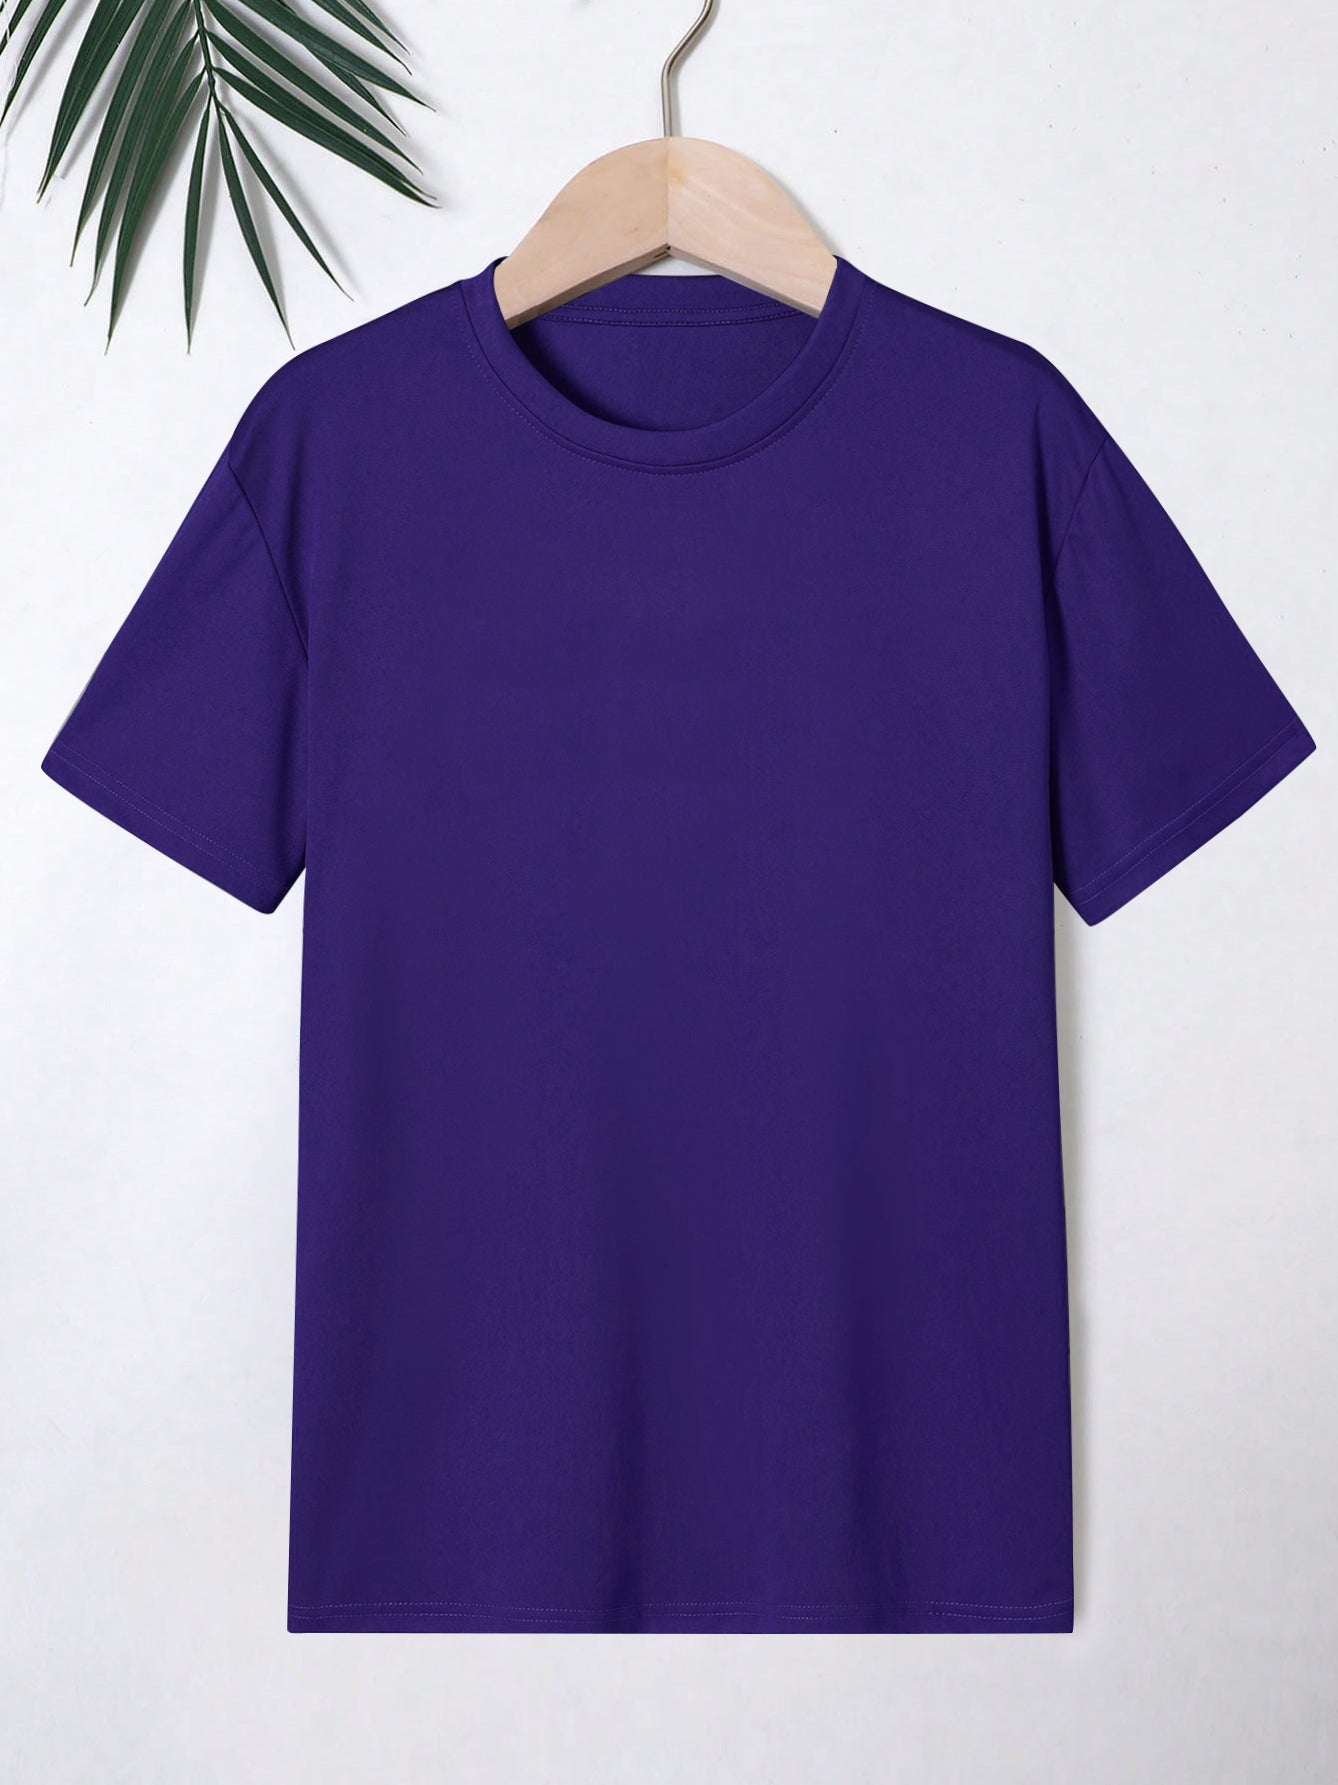 Next Single Jersey Tee Shirt For Kids-Purple-BE1234